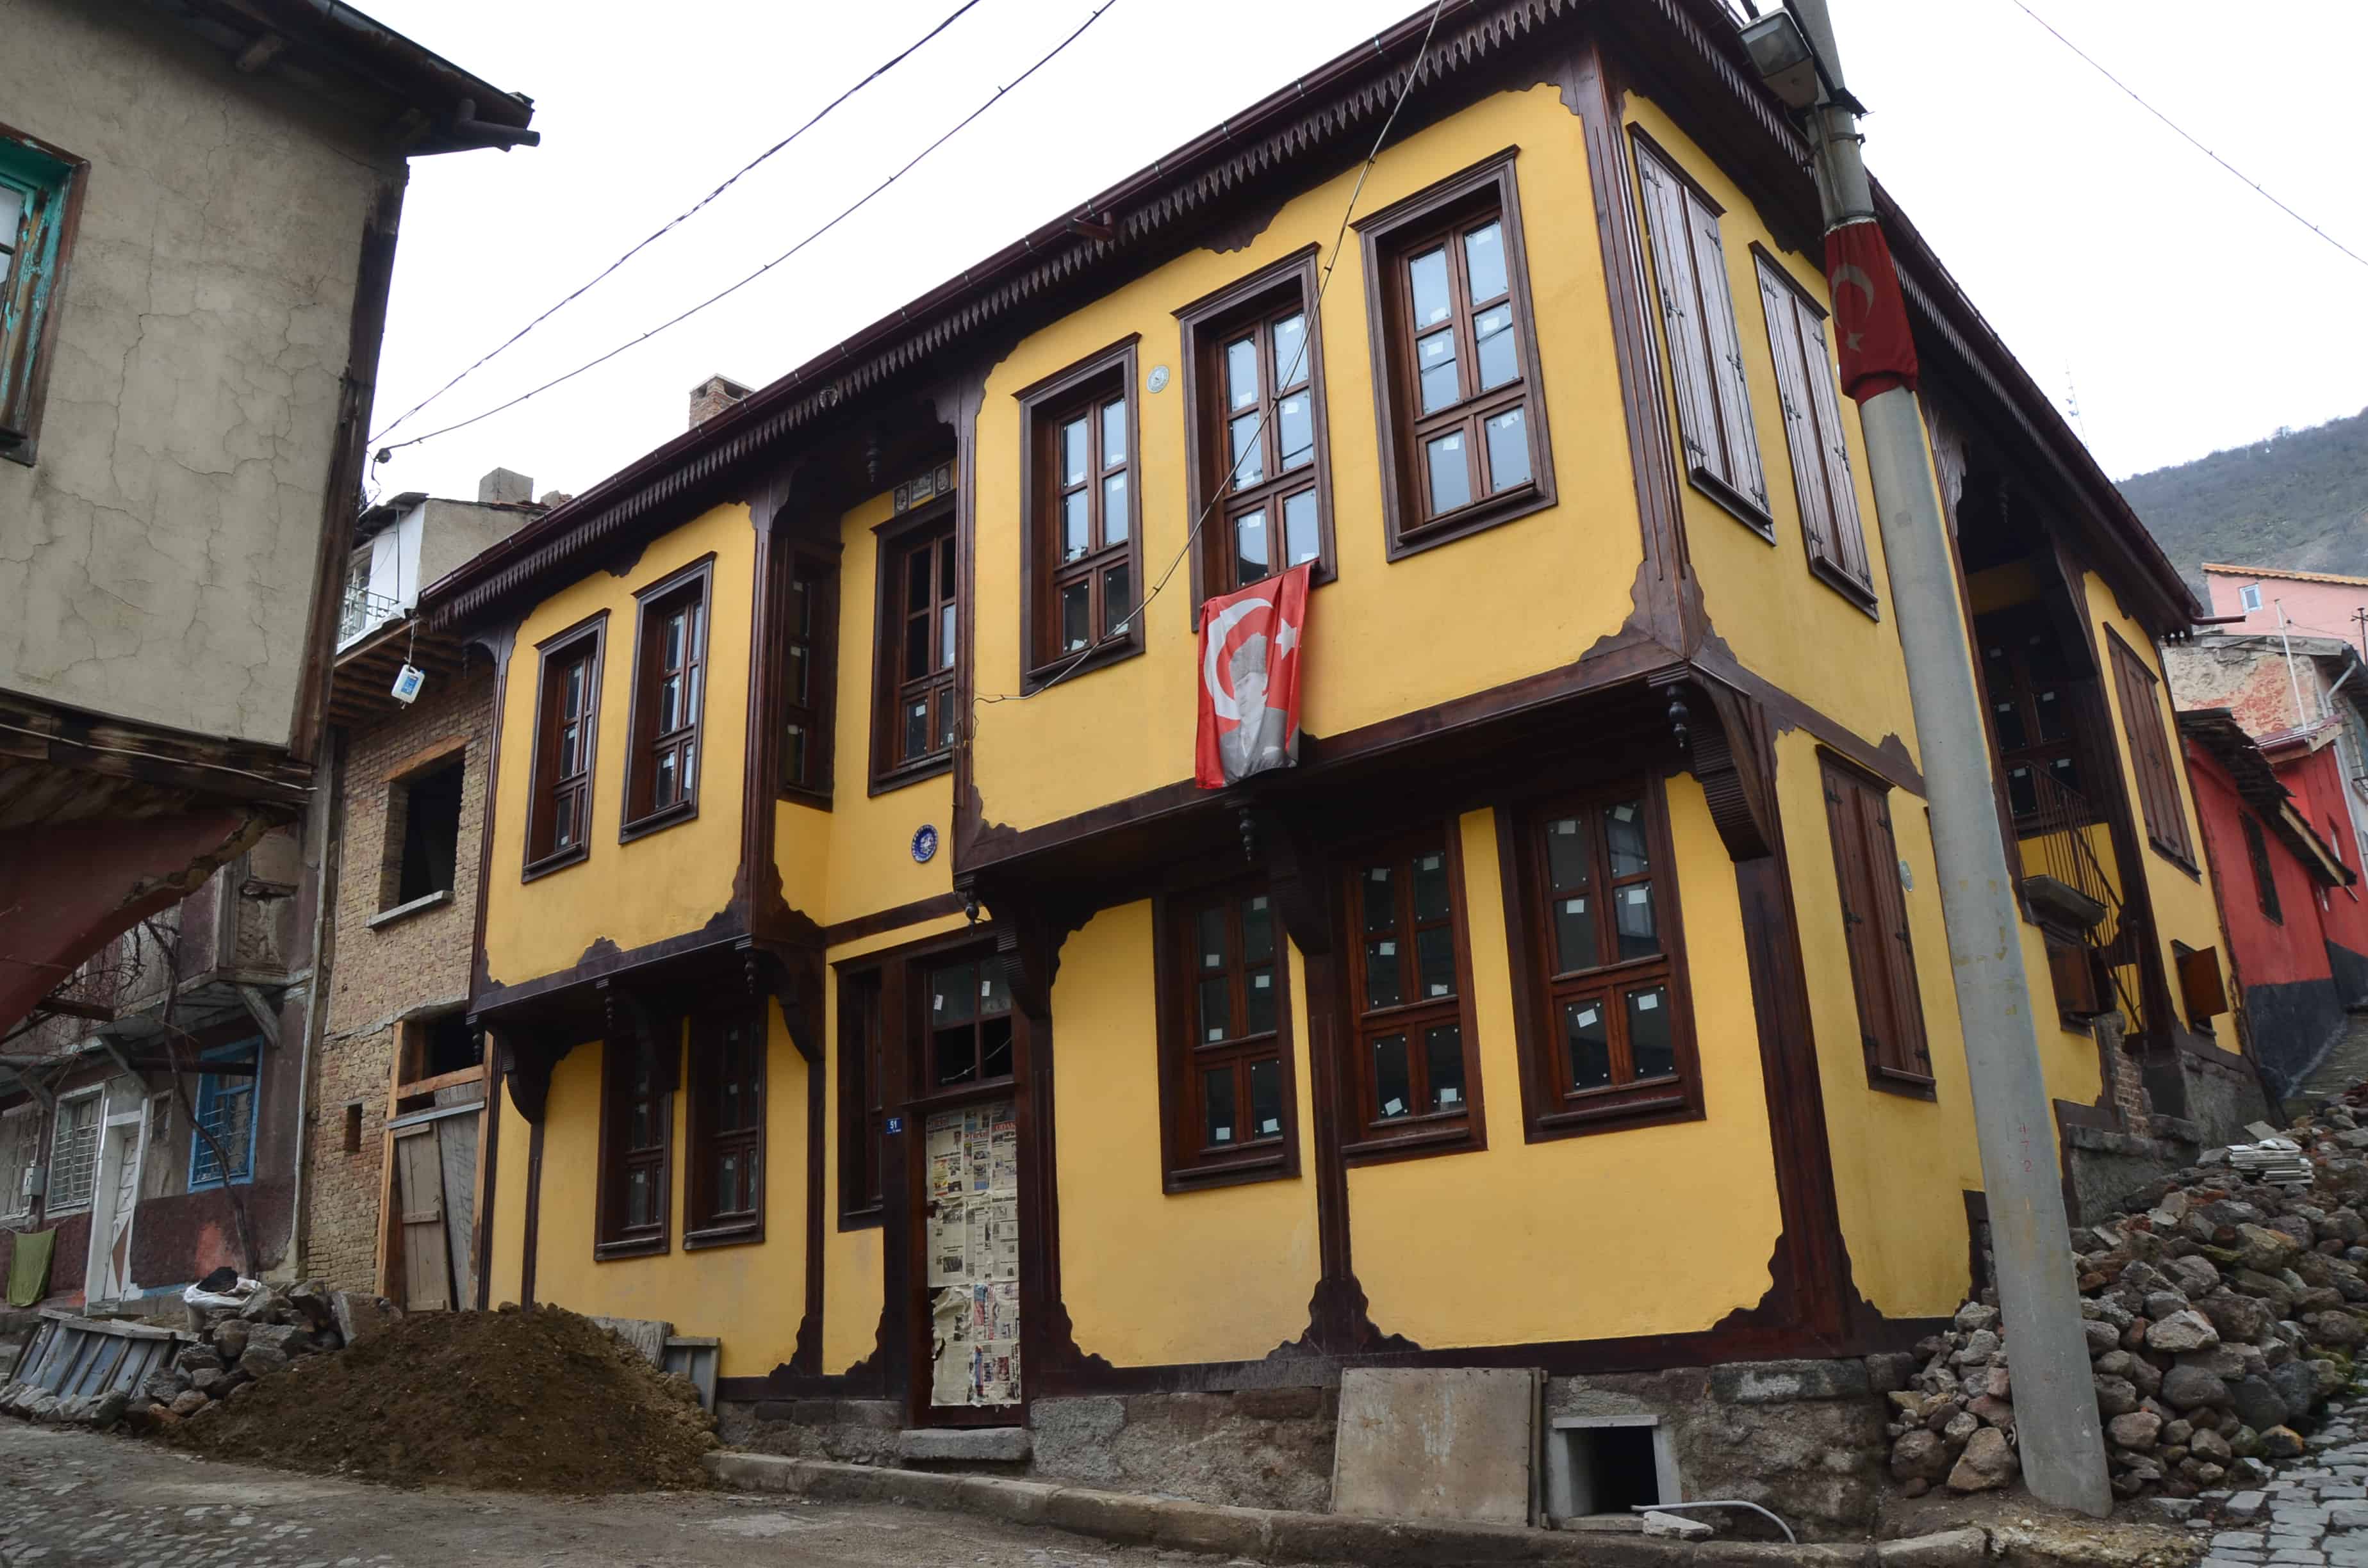 Ottoman home in Afyon, Turkey